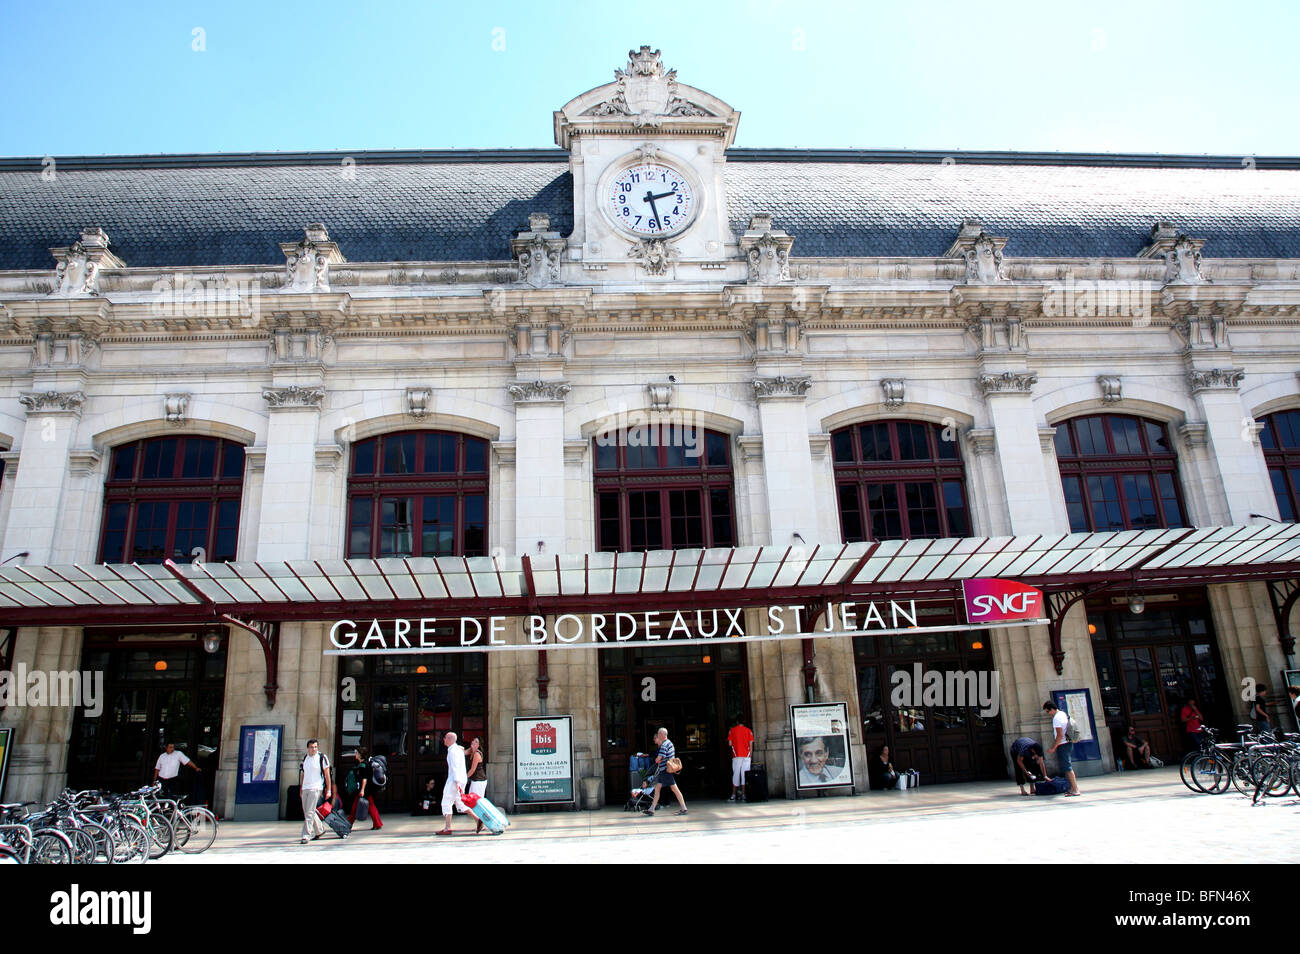 Gare de bordeaux st jean hi-res stock photography and images - Alamy